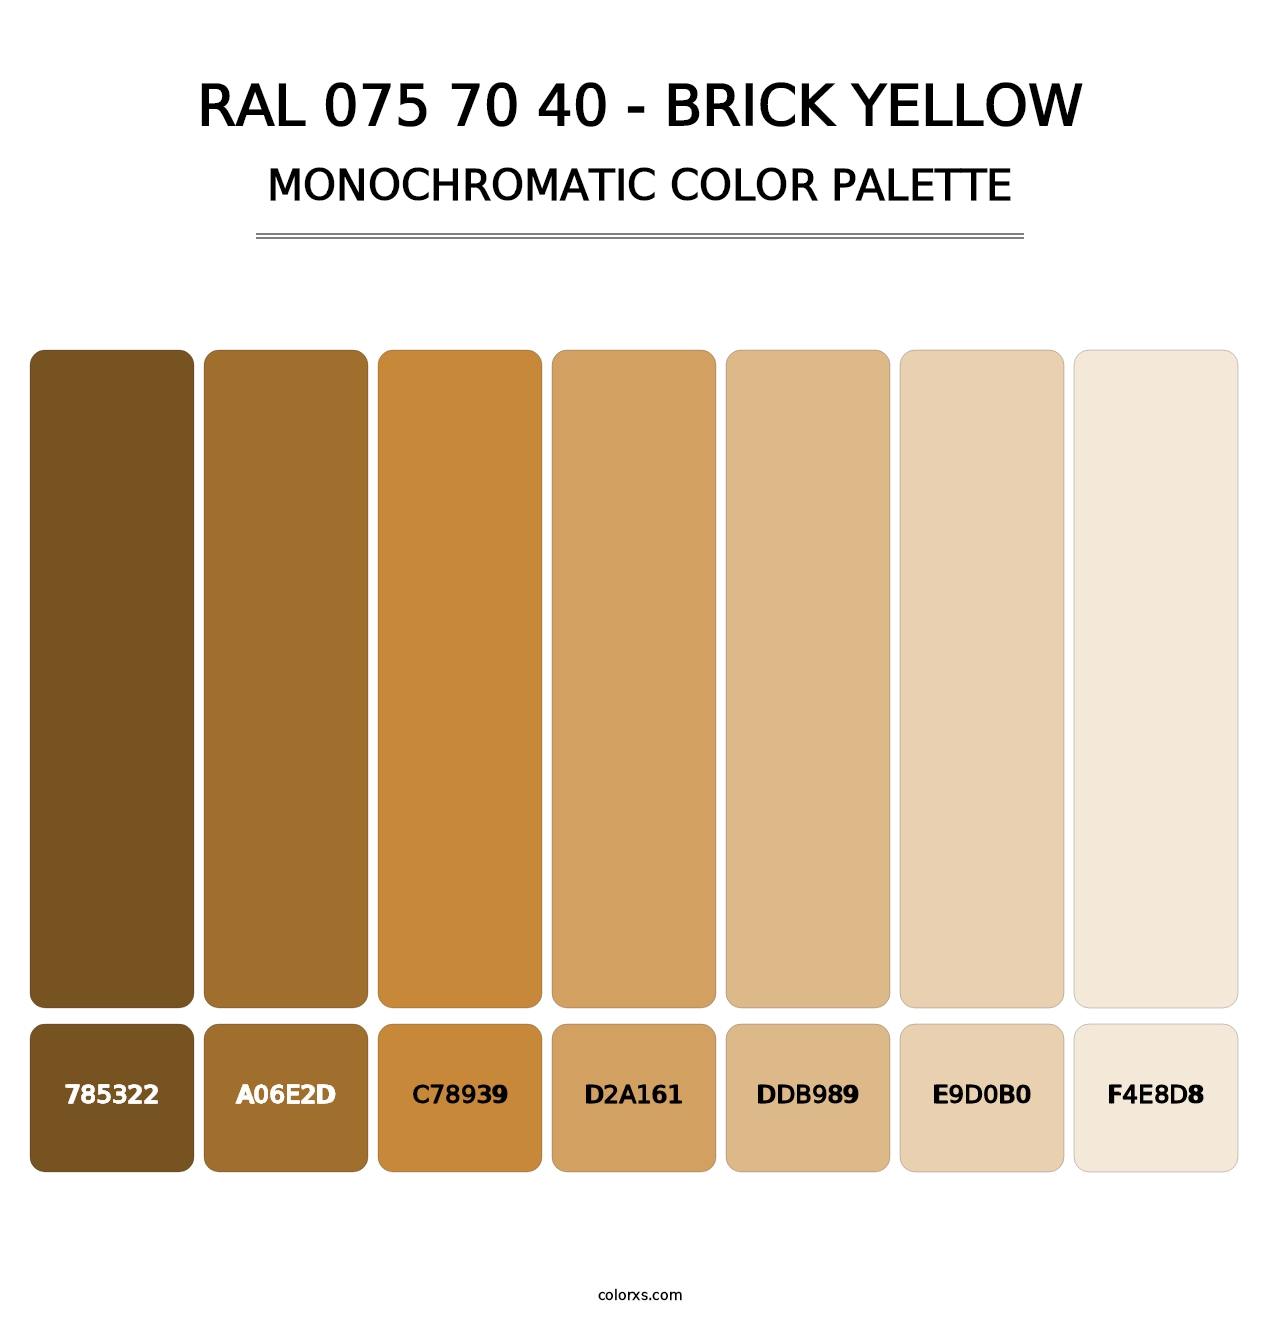 RAL 075 70 40 - Brick Yellow - Monochromatic Color Palette